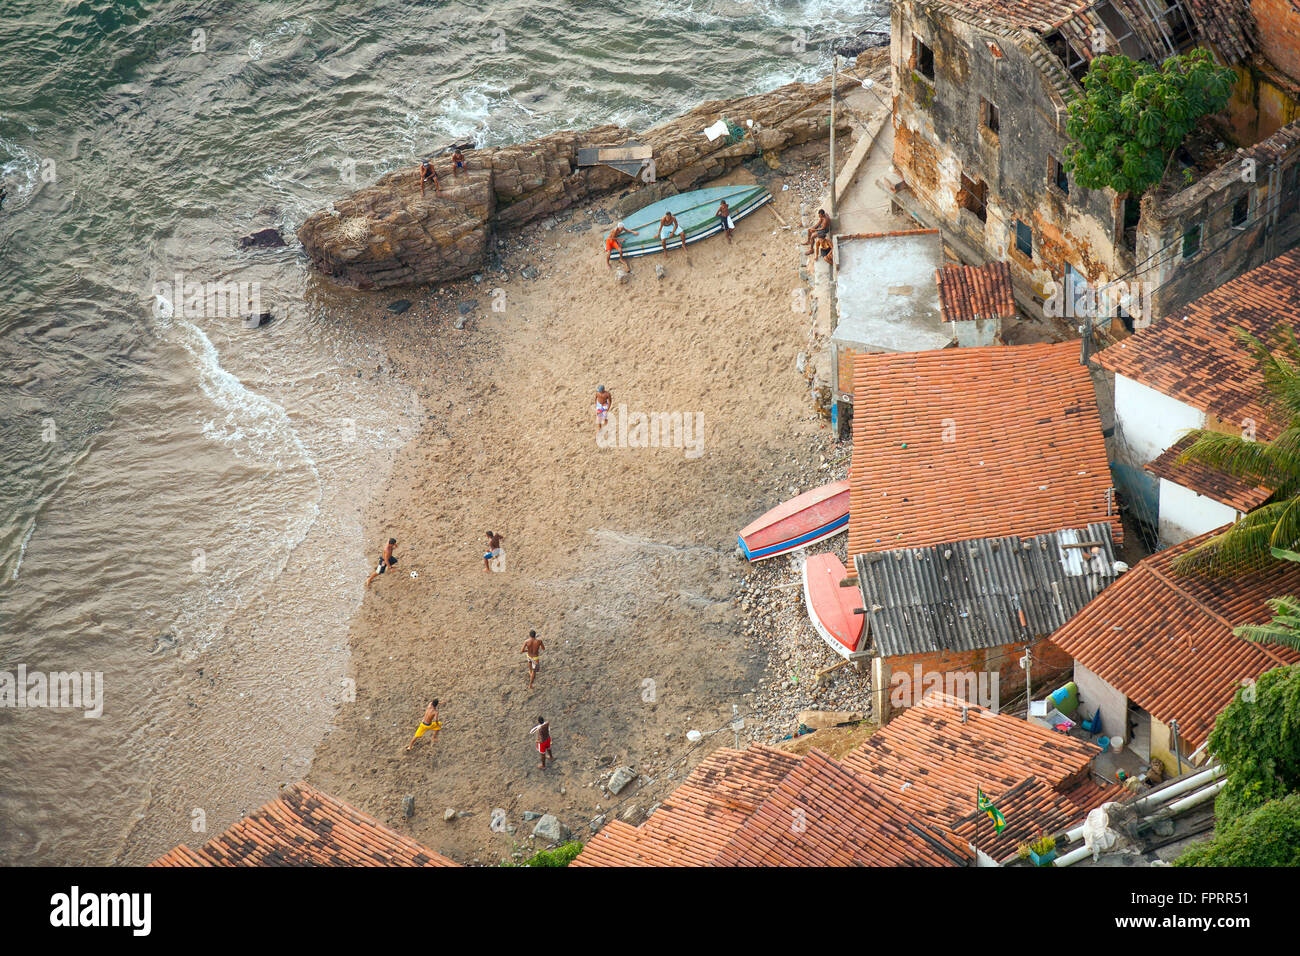 A football match on the beach in a favela in Salvador, Bahia, Brazil Stock Photo